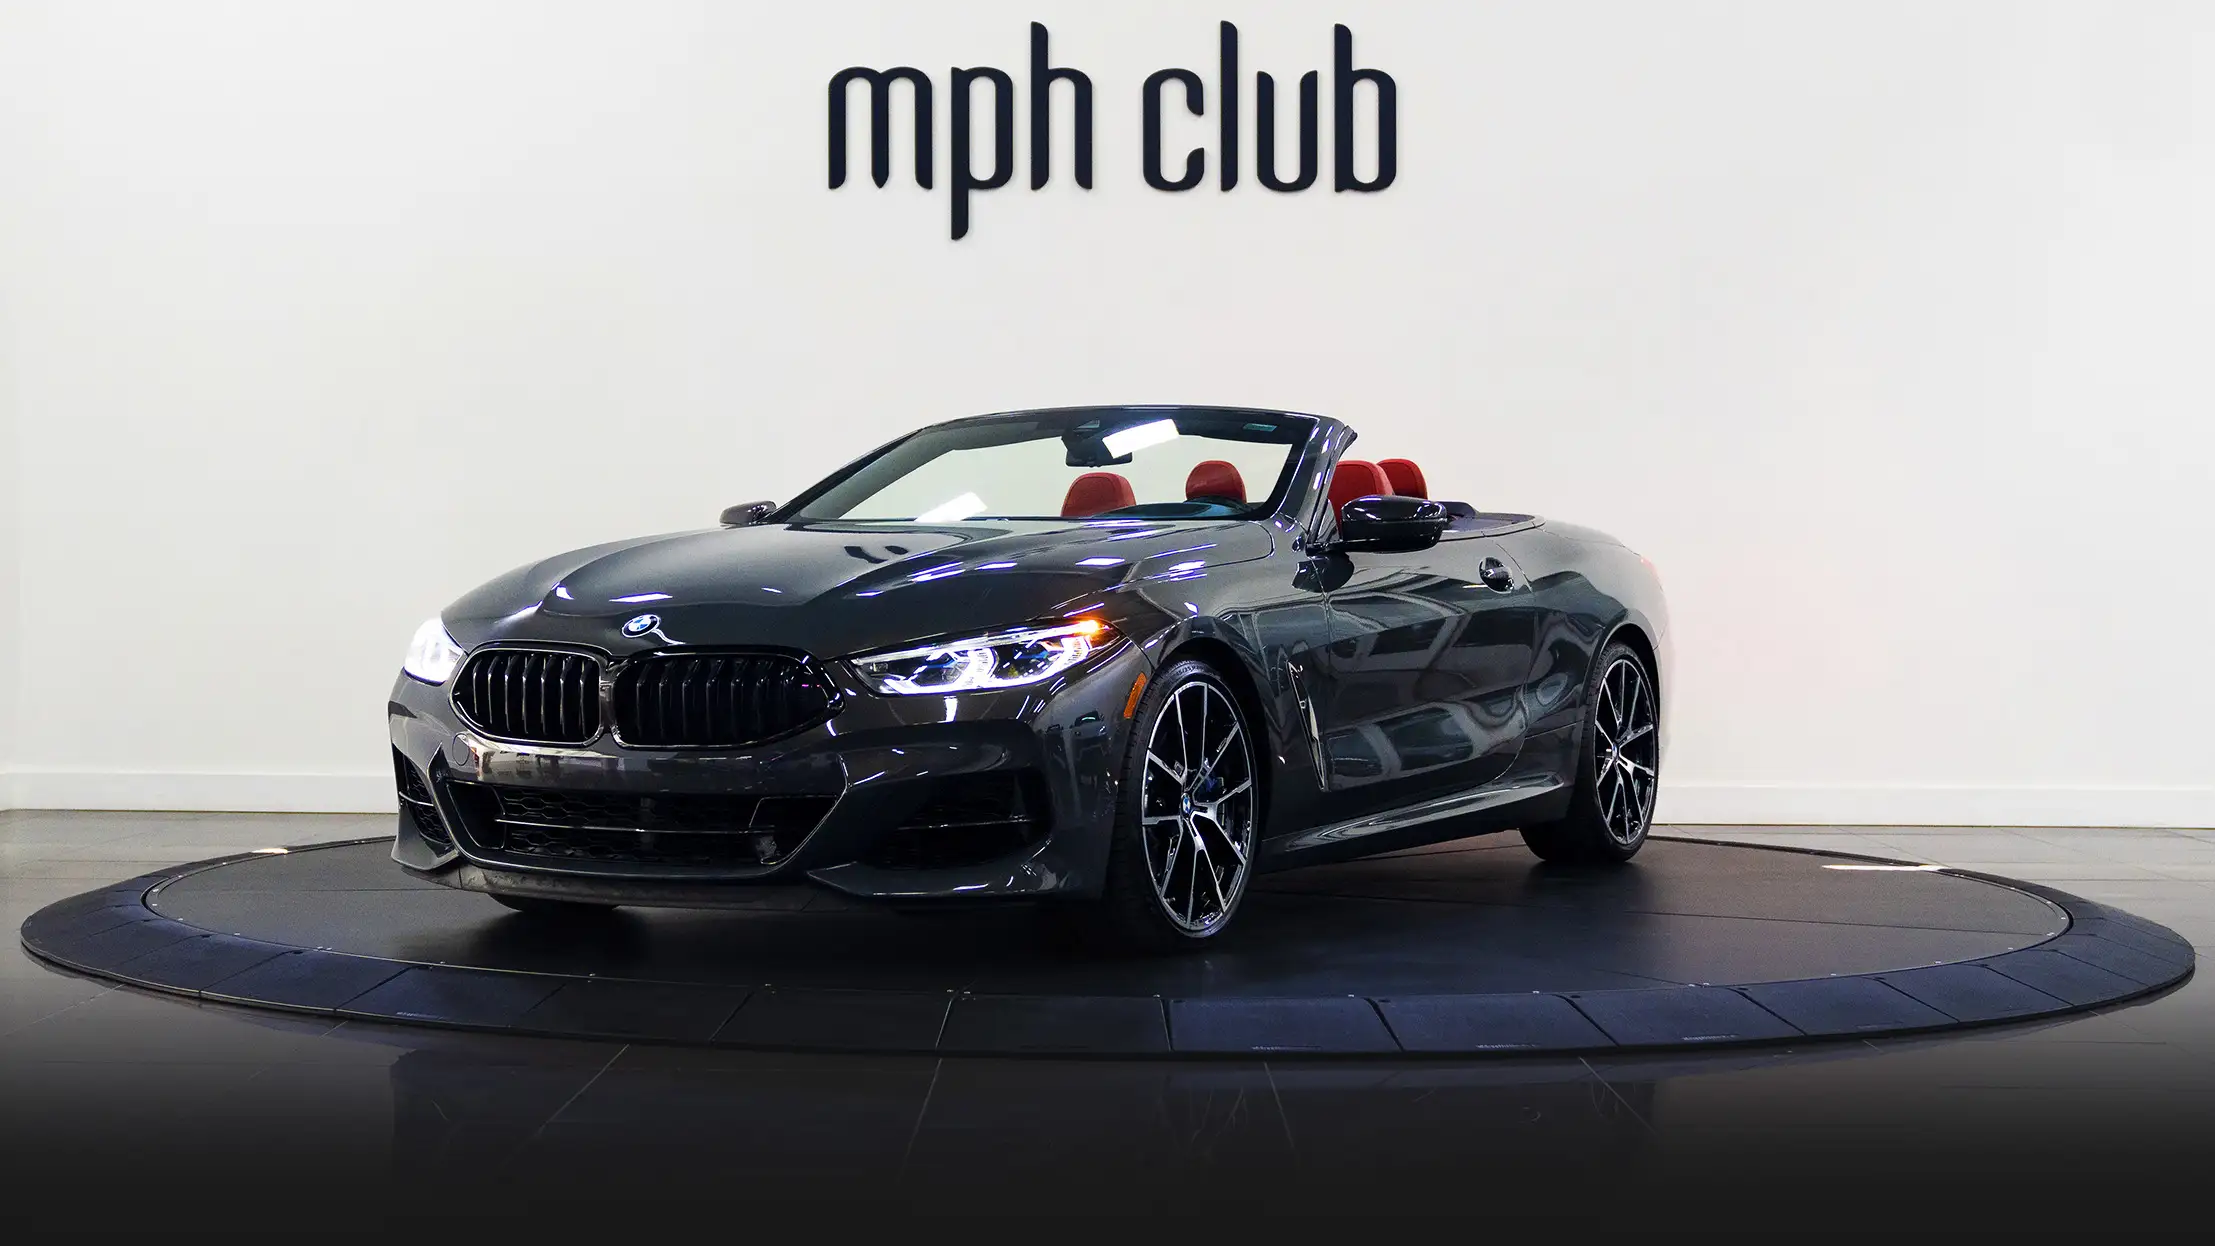 Grey BMW 850I rental profile view mph club